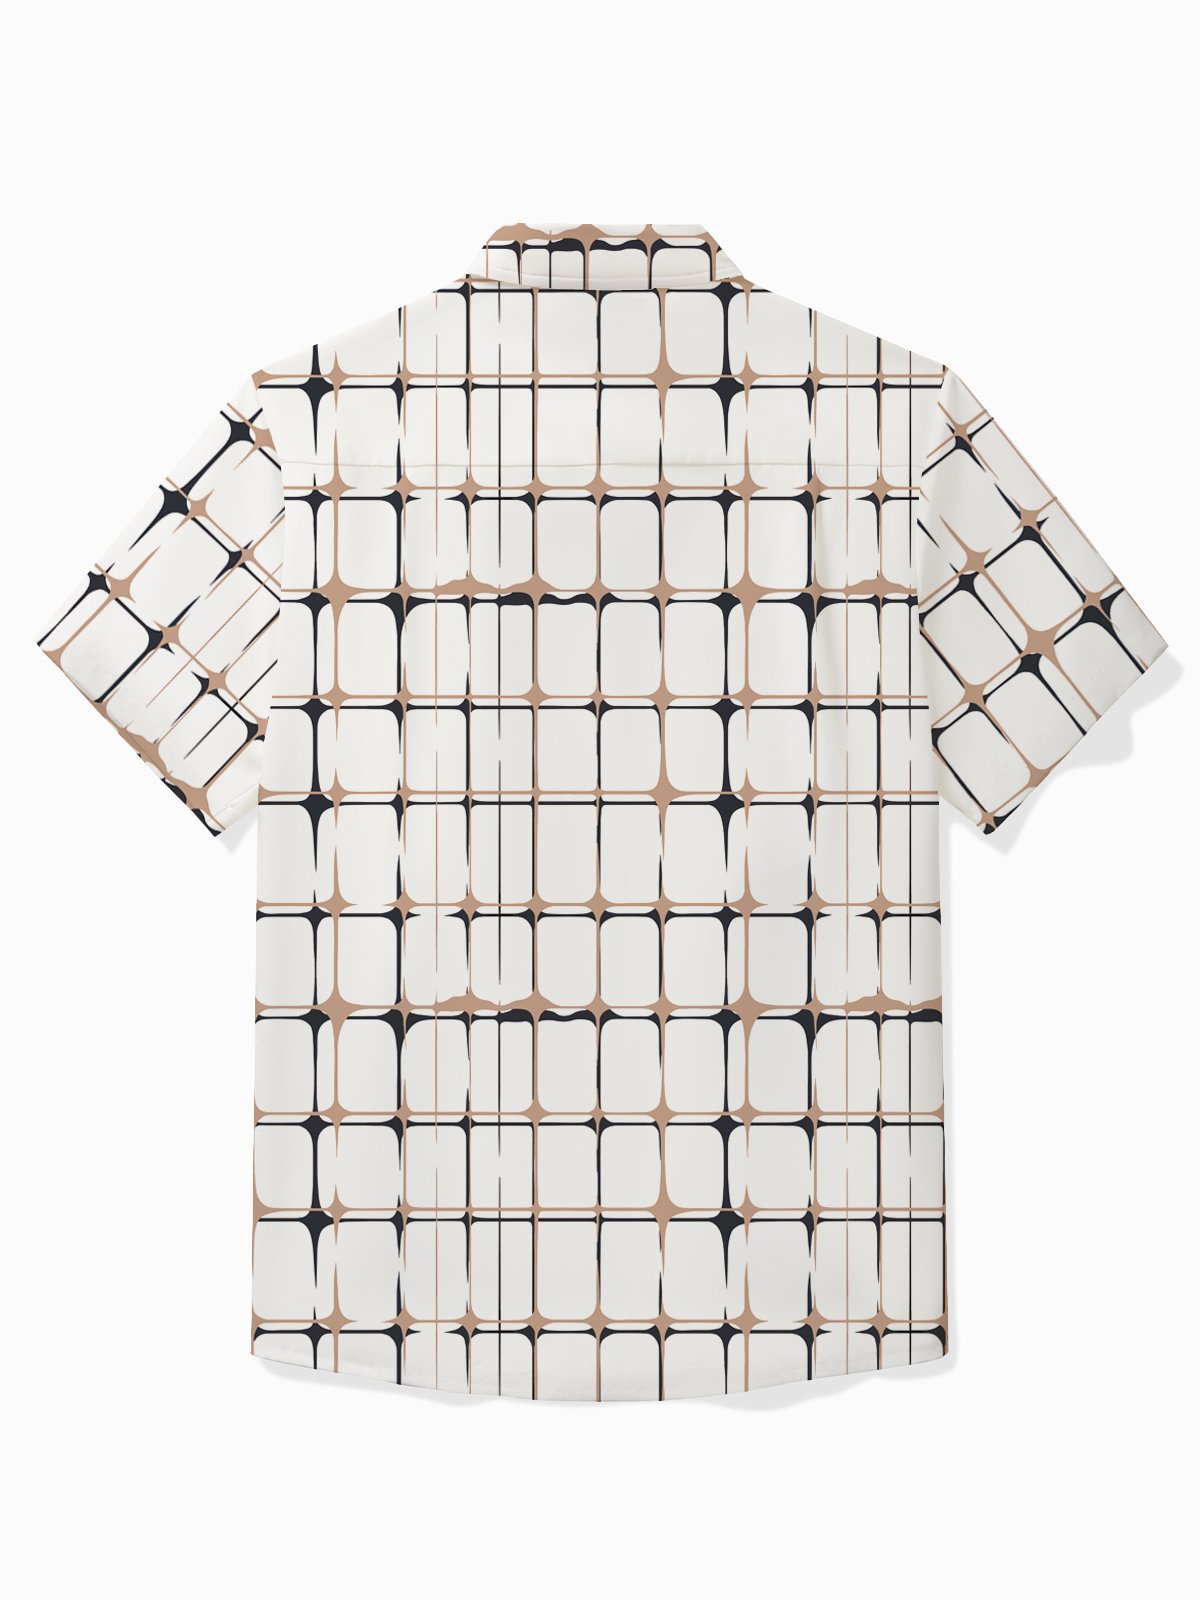 Royaura® Basics Men's Plaid Geometric Print Button Pocket Short Sleeve Shirt